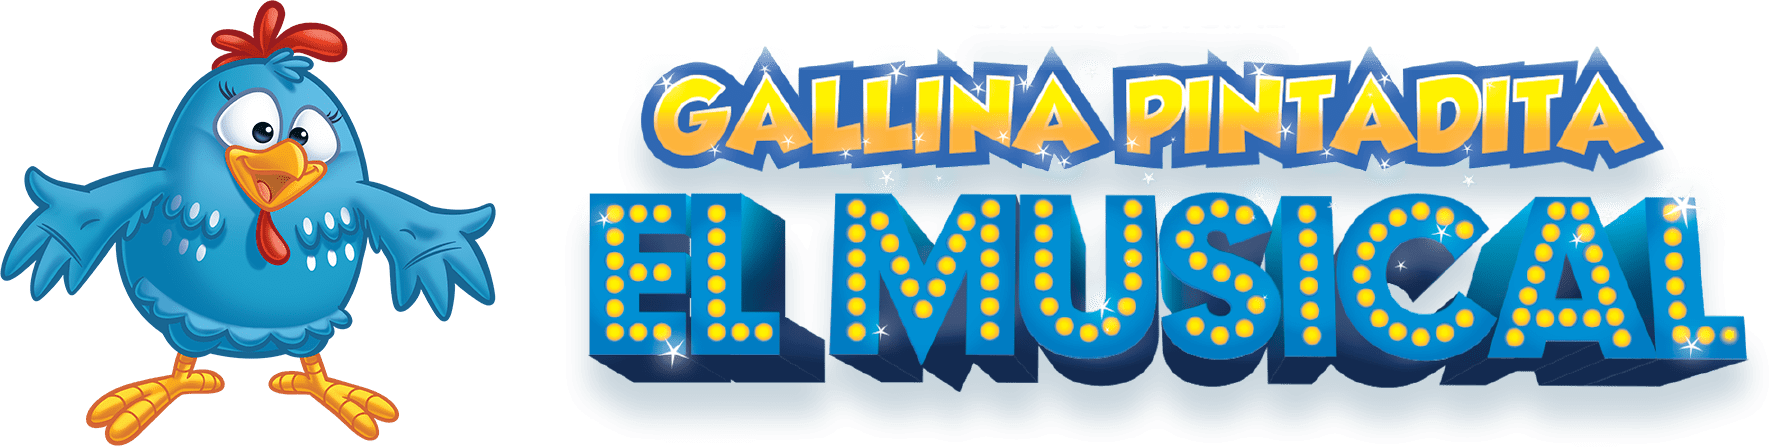 Gallina Pintadita: El Musical - Lottie Dottie Chicken’s Official Show